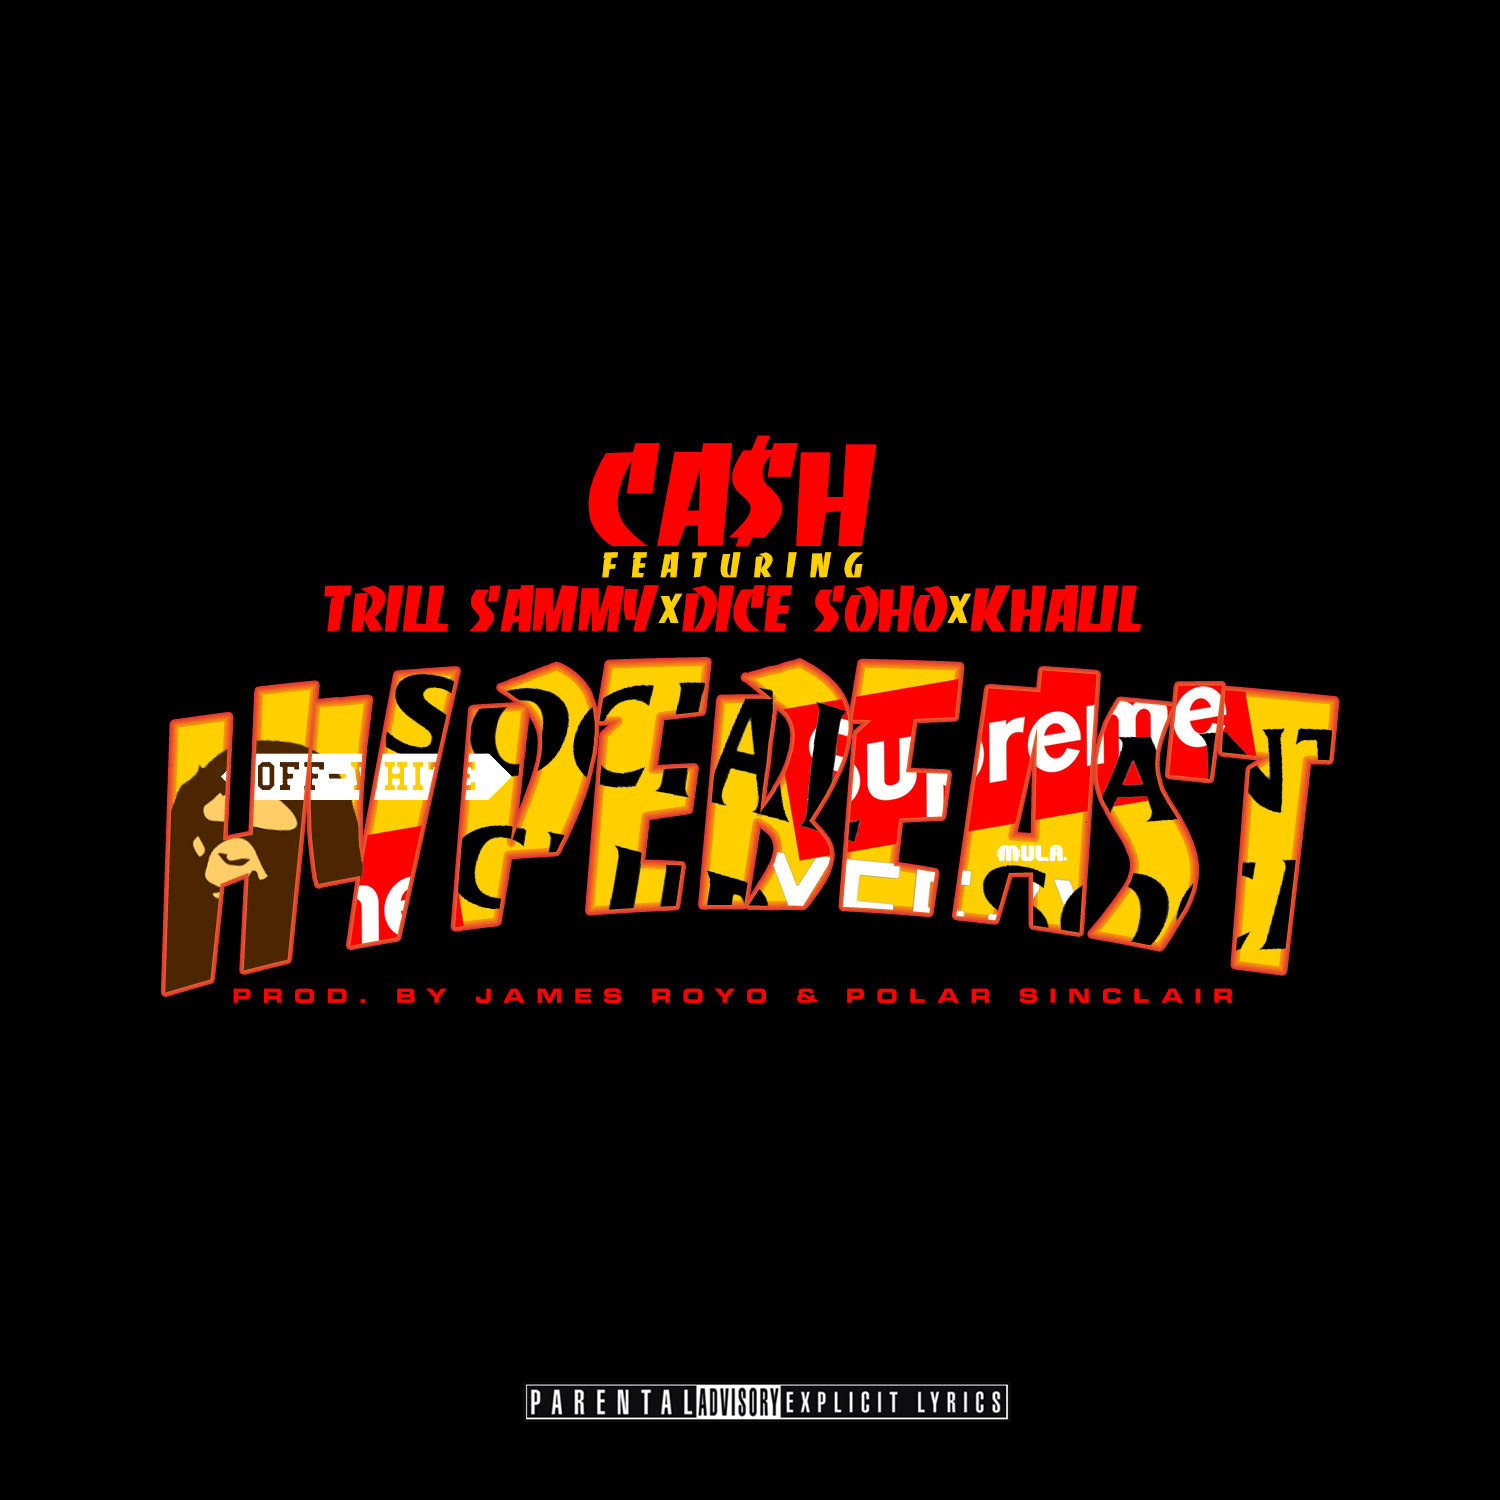 [NEW MUSIC] CA$H -‘Hyp3beast’ F/ Trill Sammy, Dice Soho, & Khalil (Produced by James Royo)